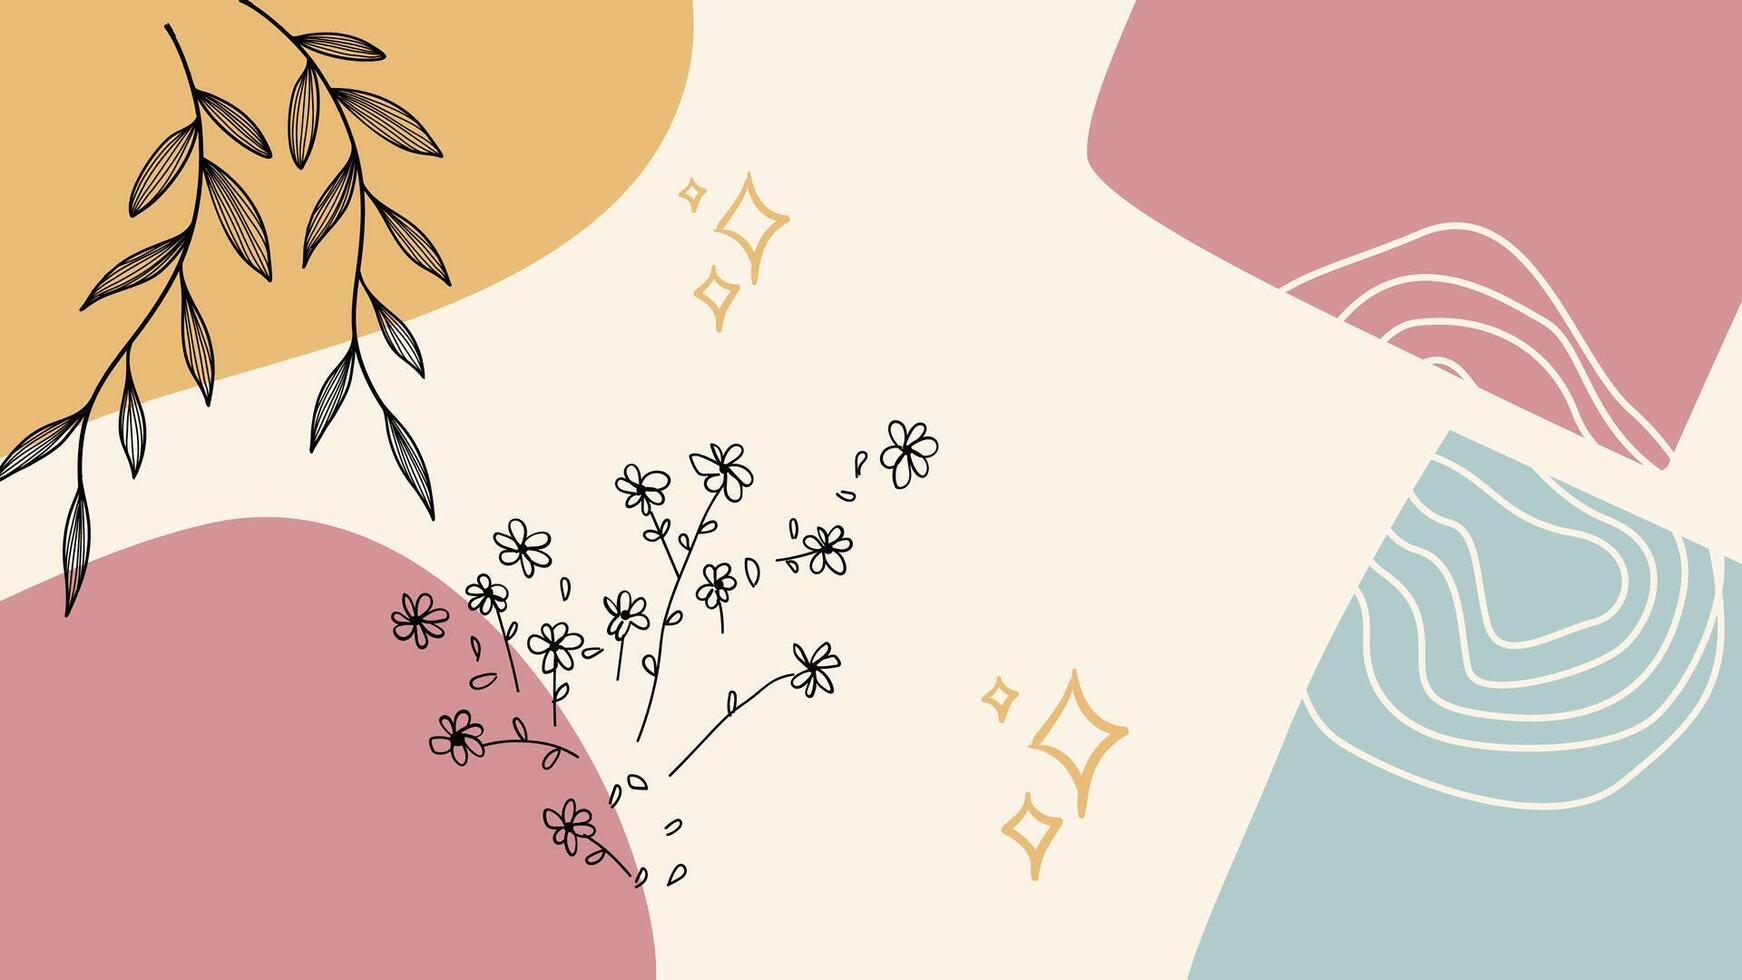 abstrakt blommig bakgrund med hand dragen klotter blommor. vektor illustration.